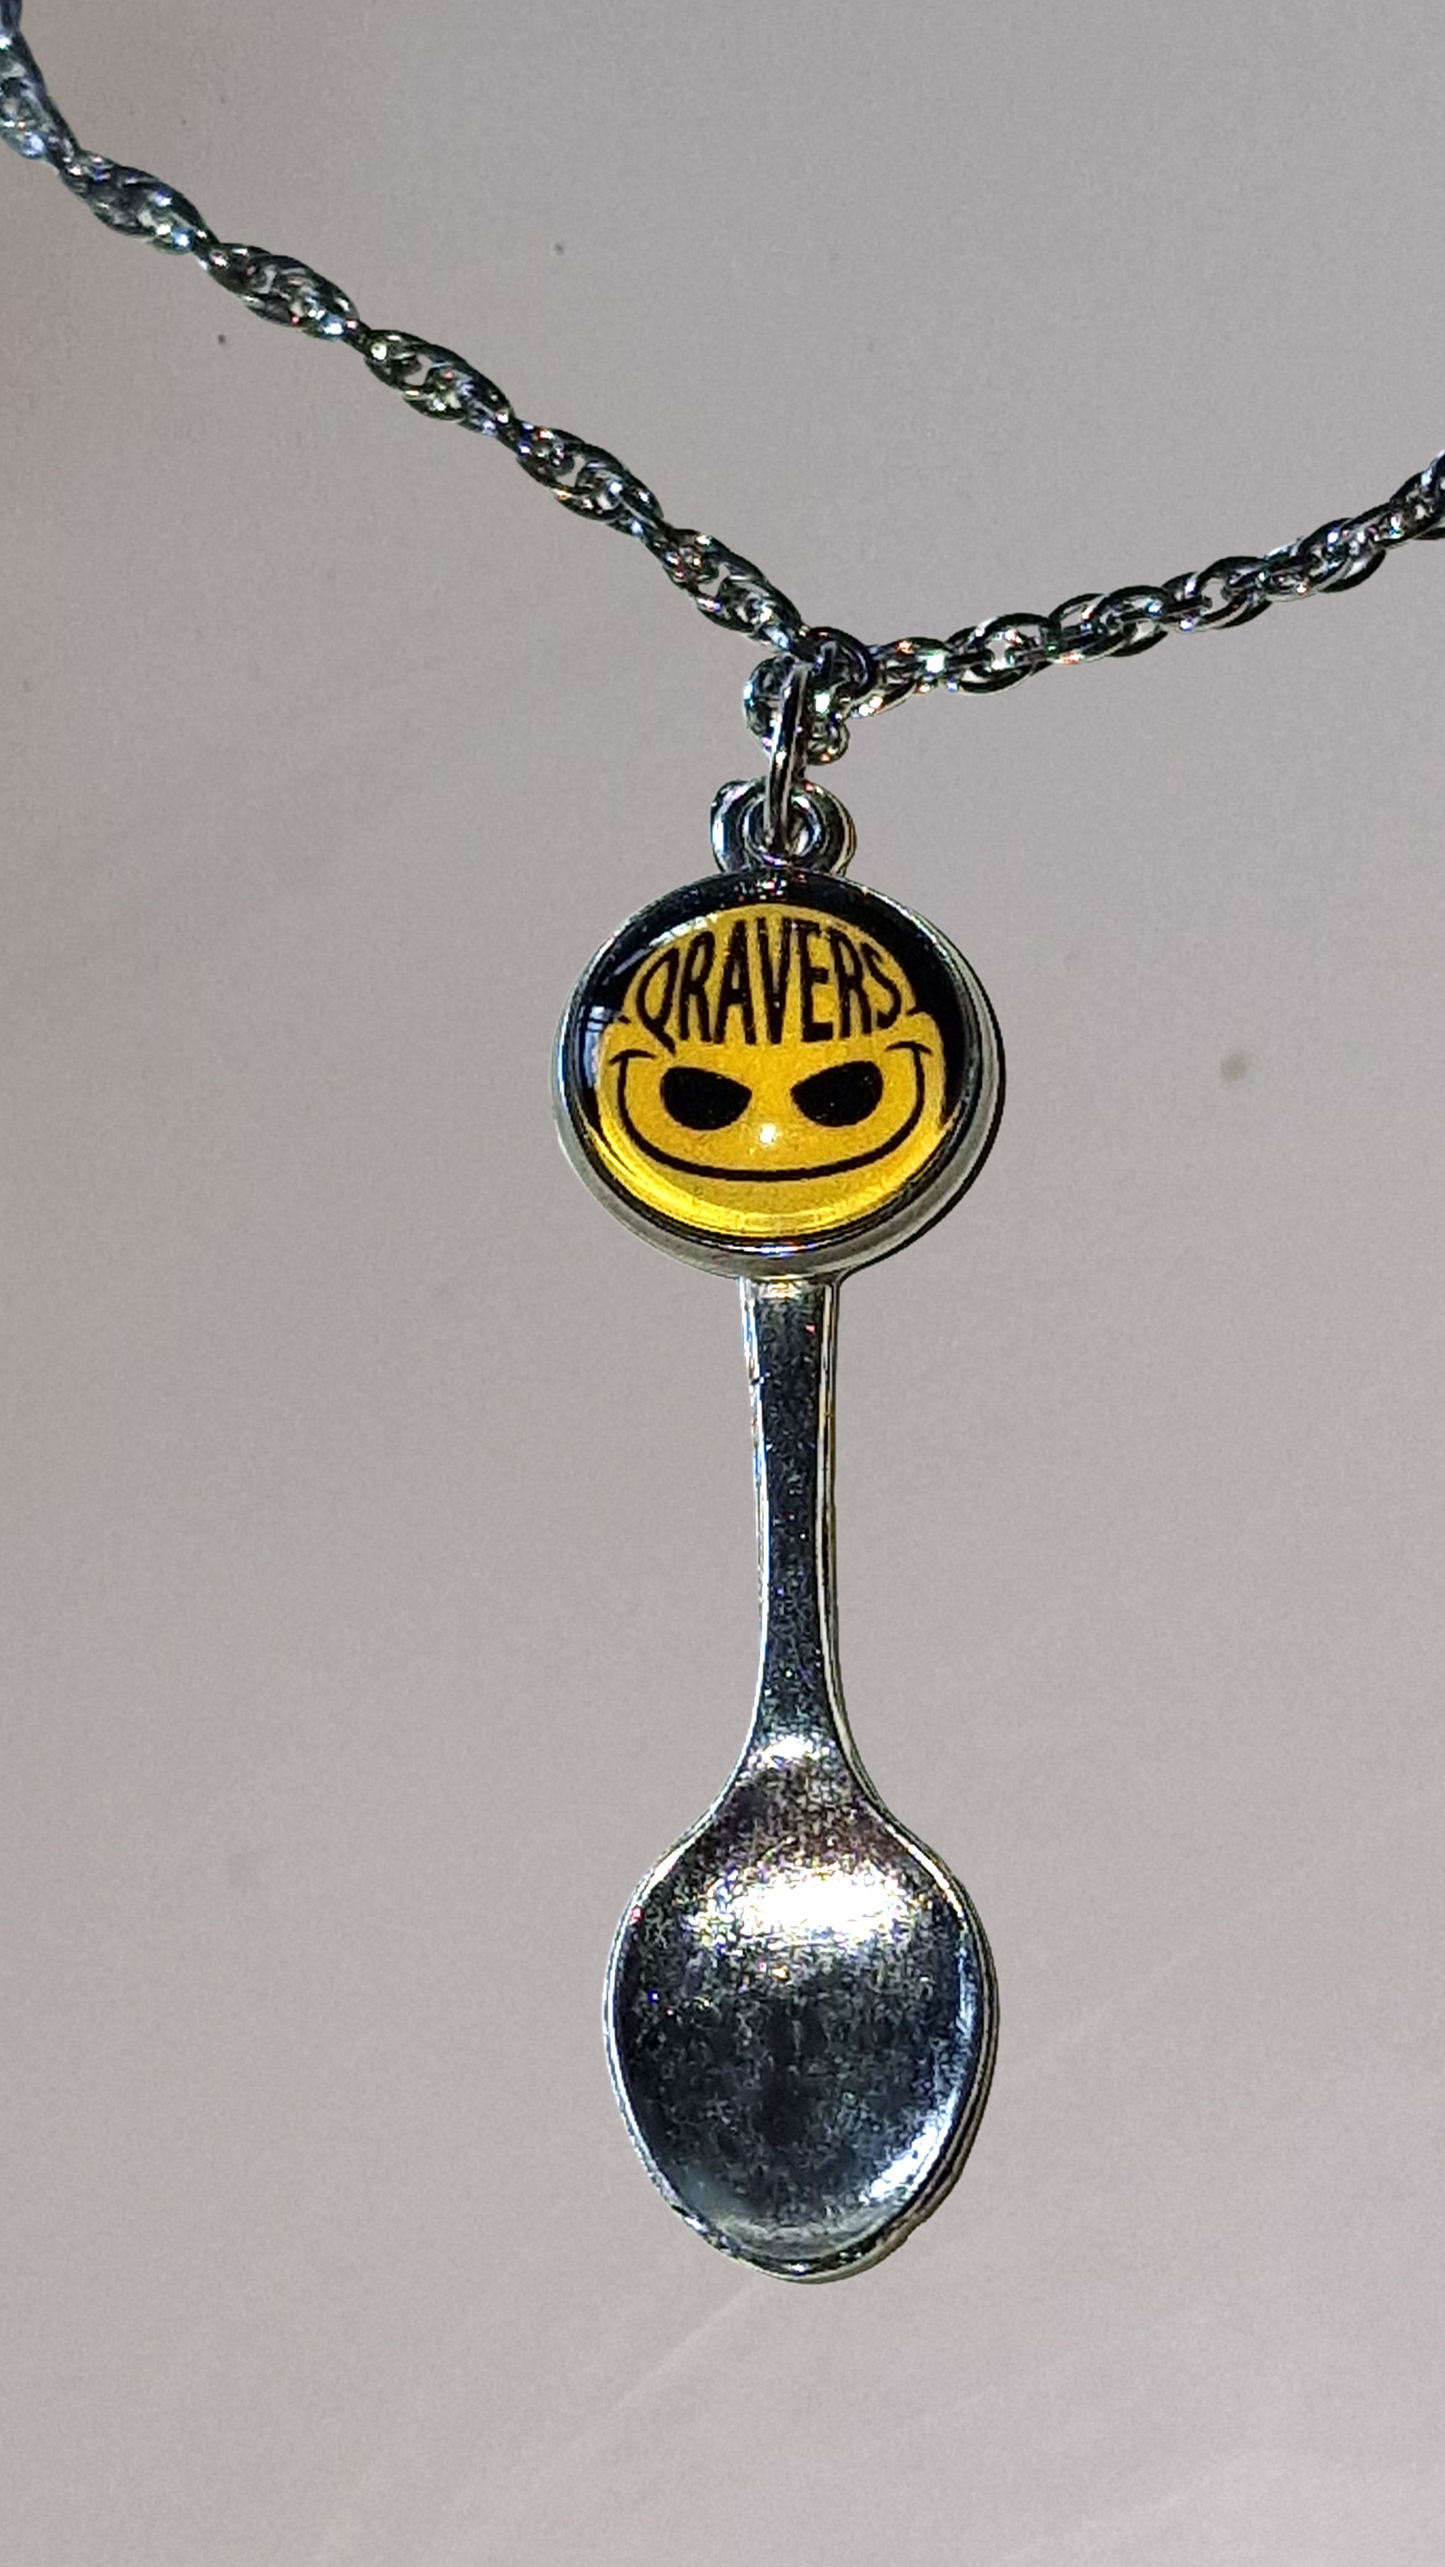 Qravers Logo Spoon Necklace